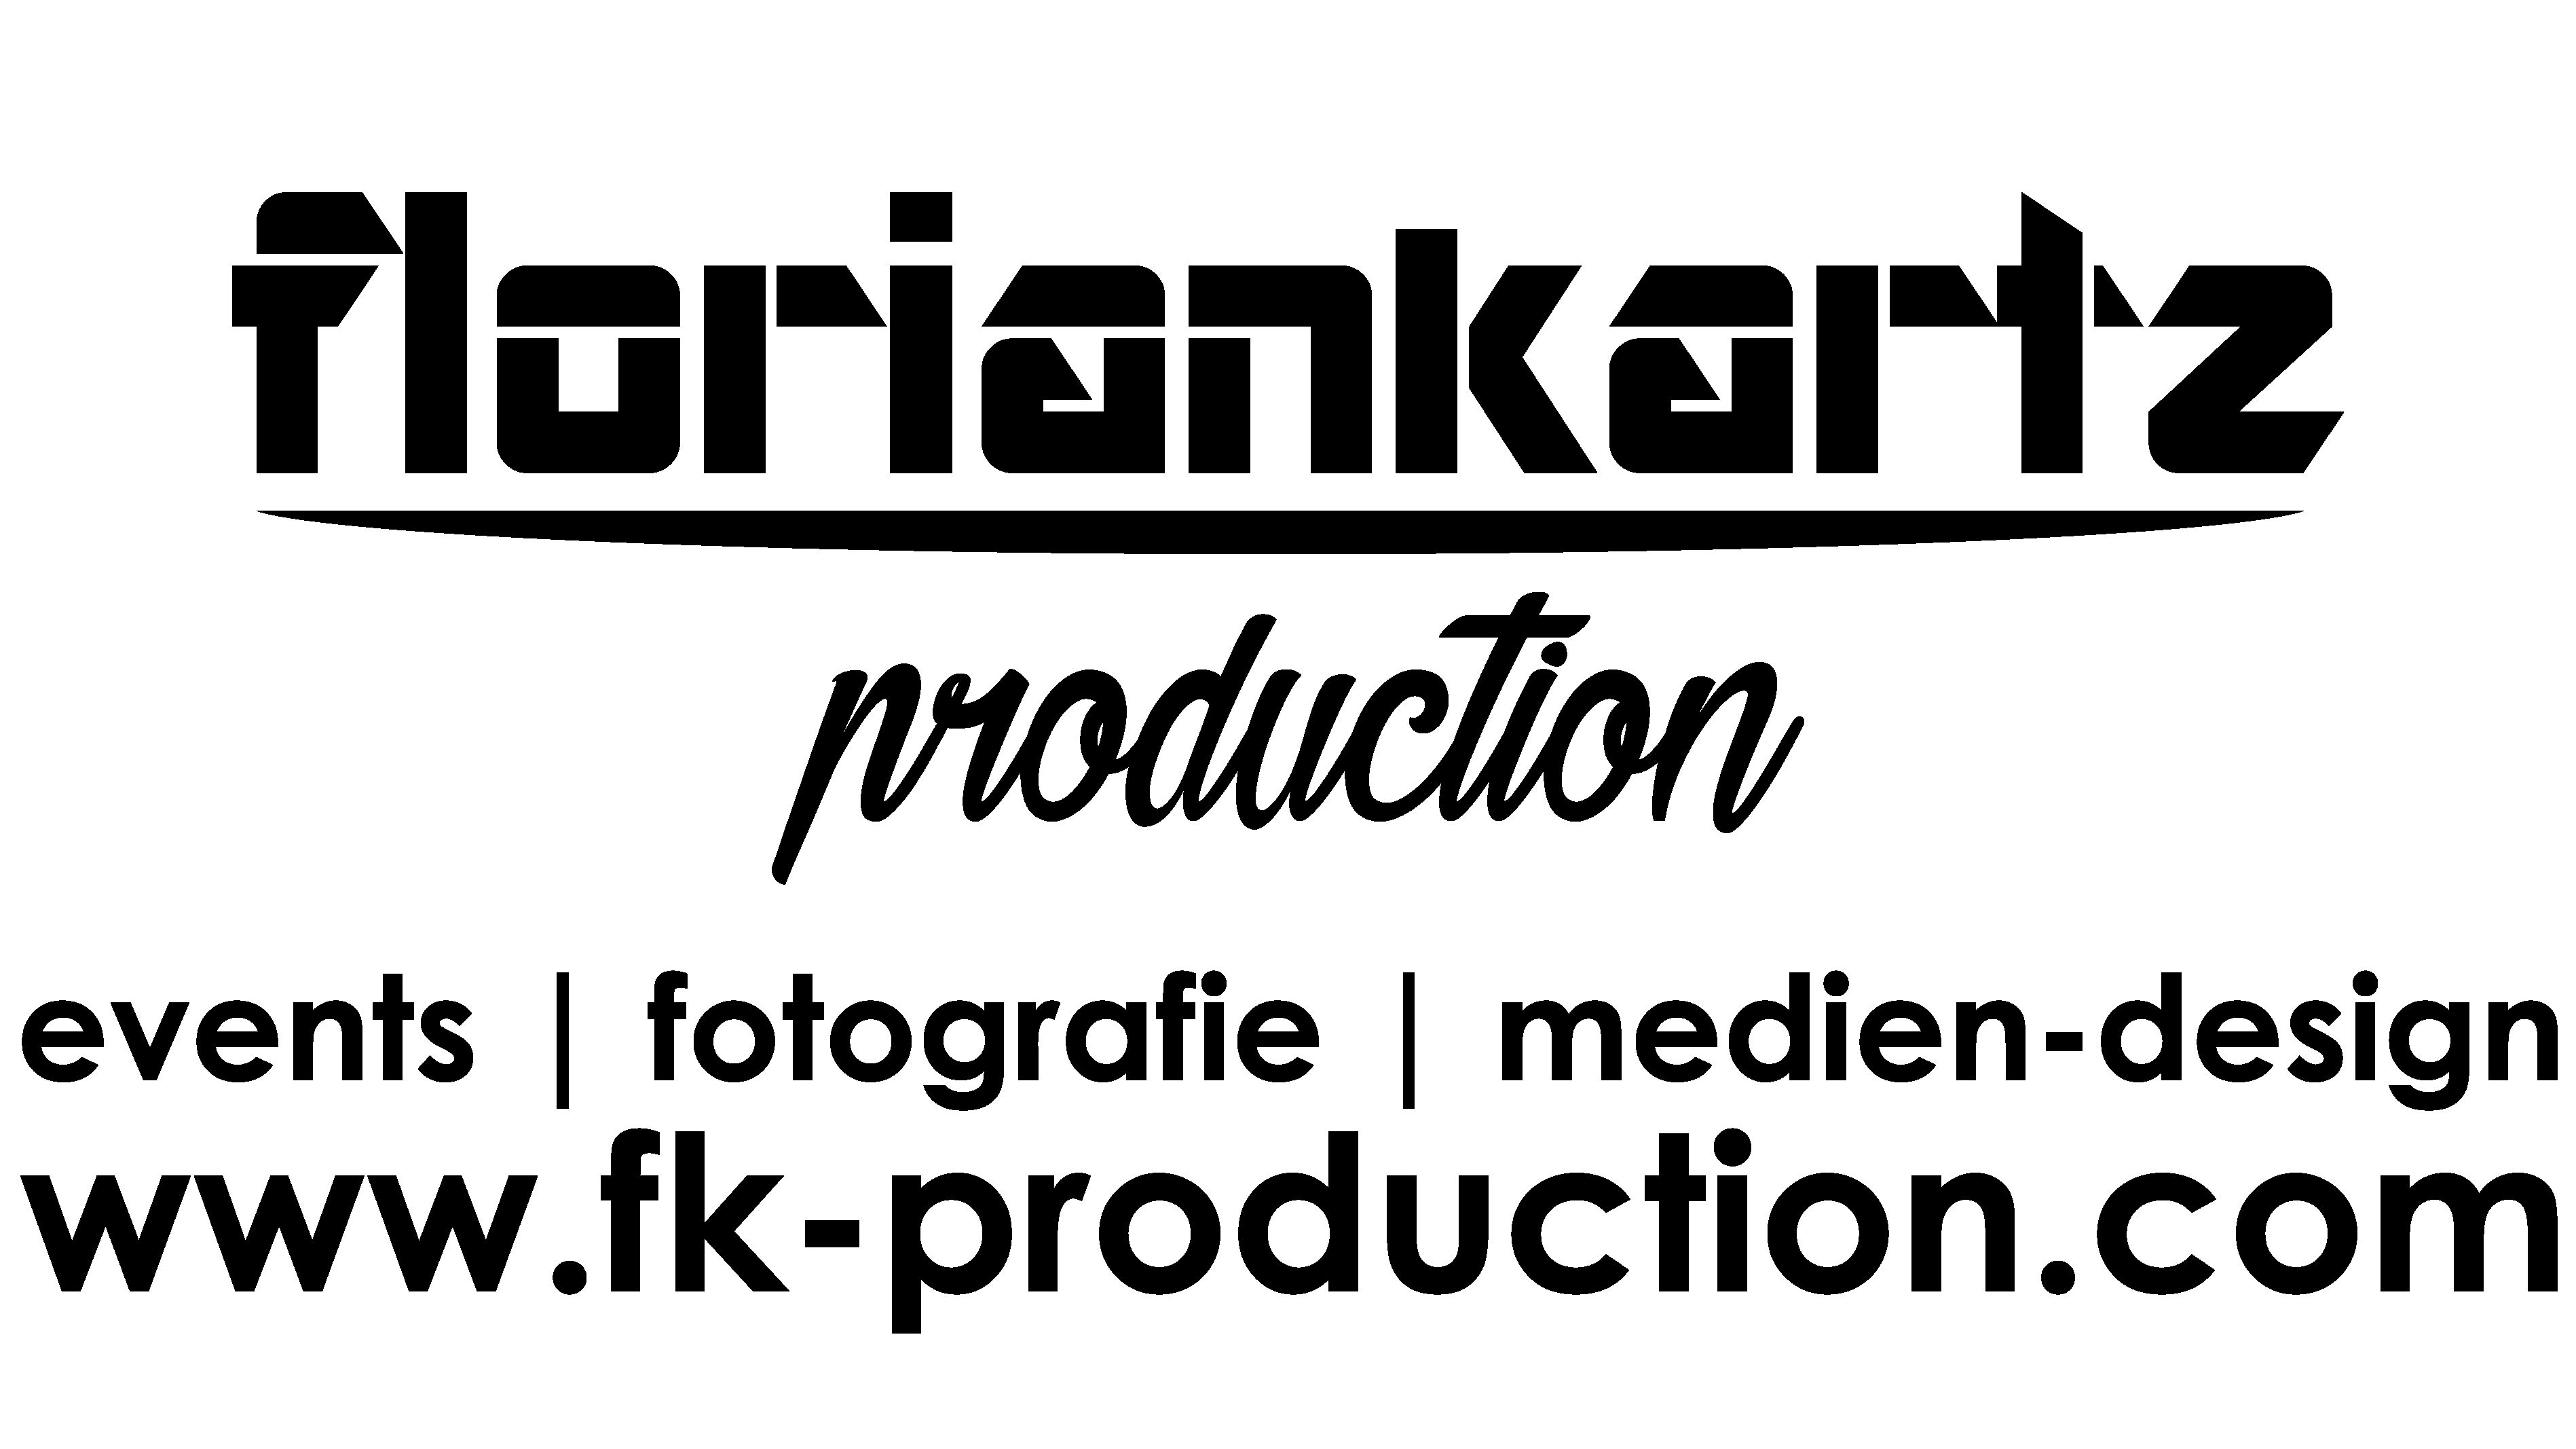 floriankartz.production logo details schwarz